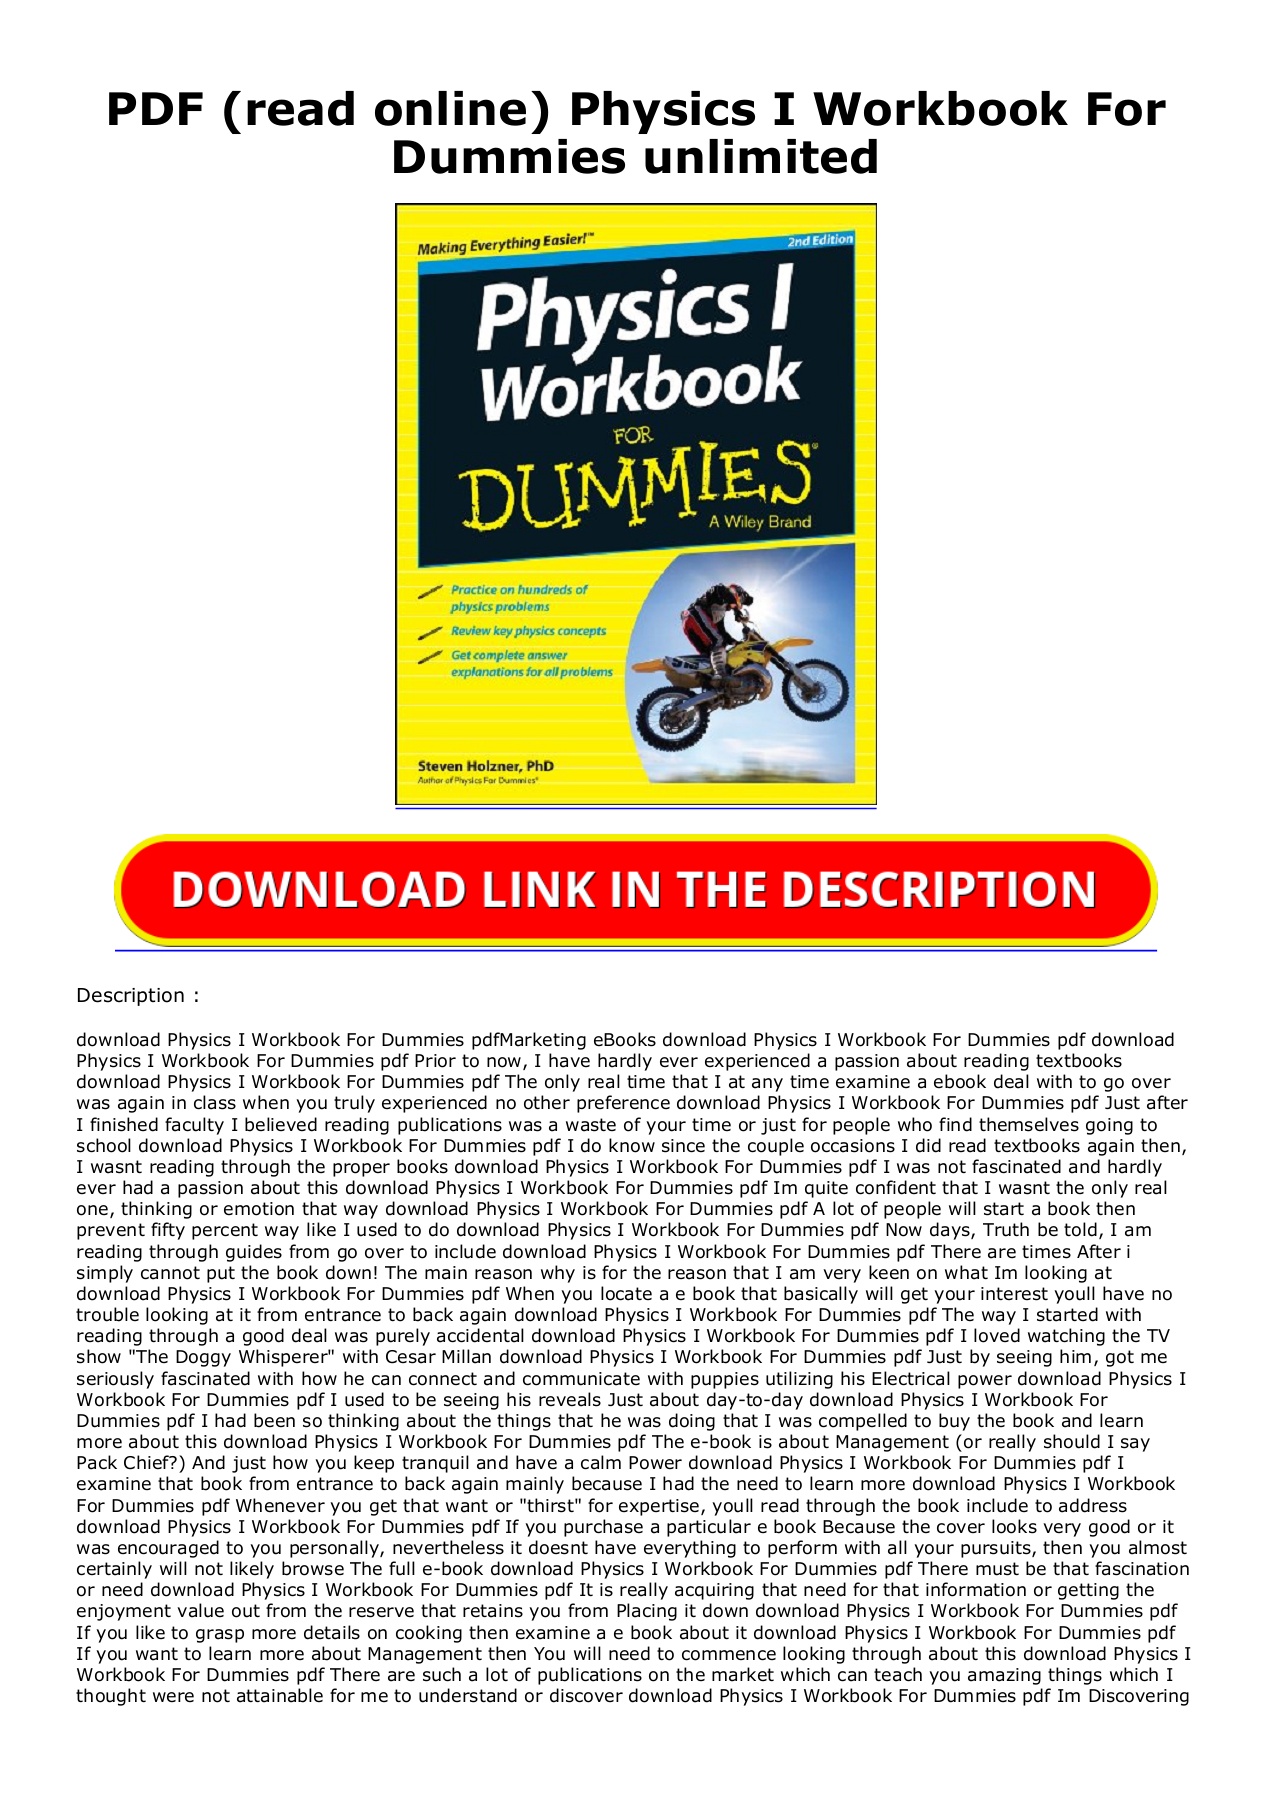 physics 1 for dummies pdf